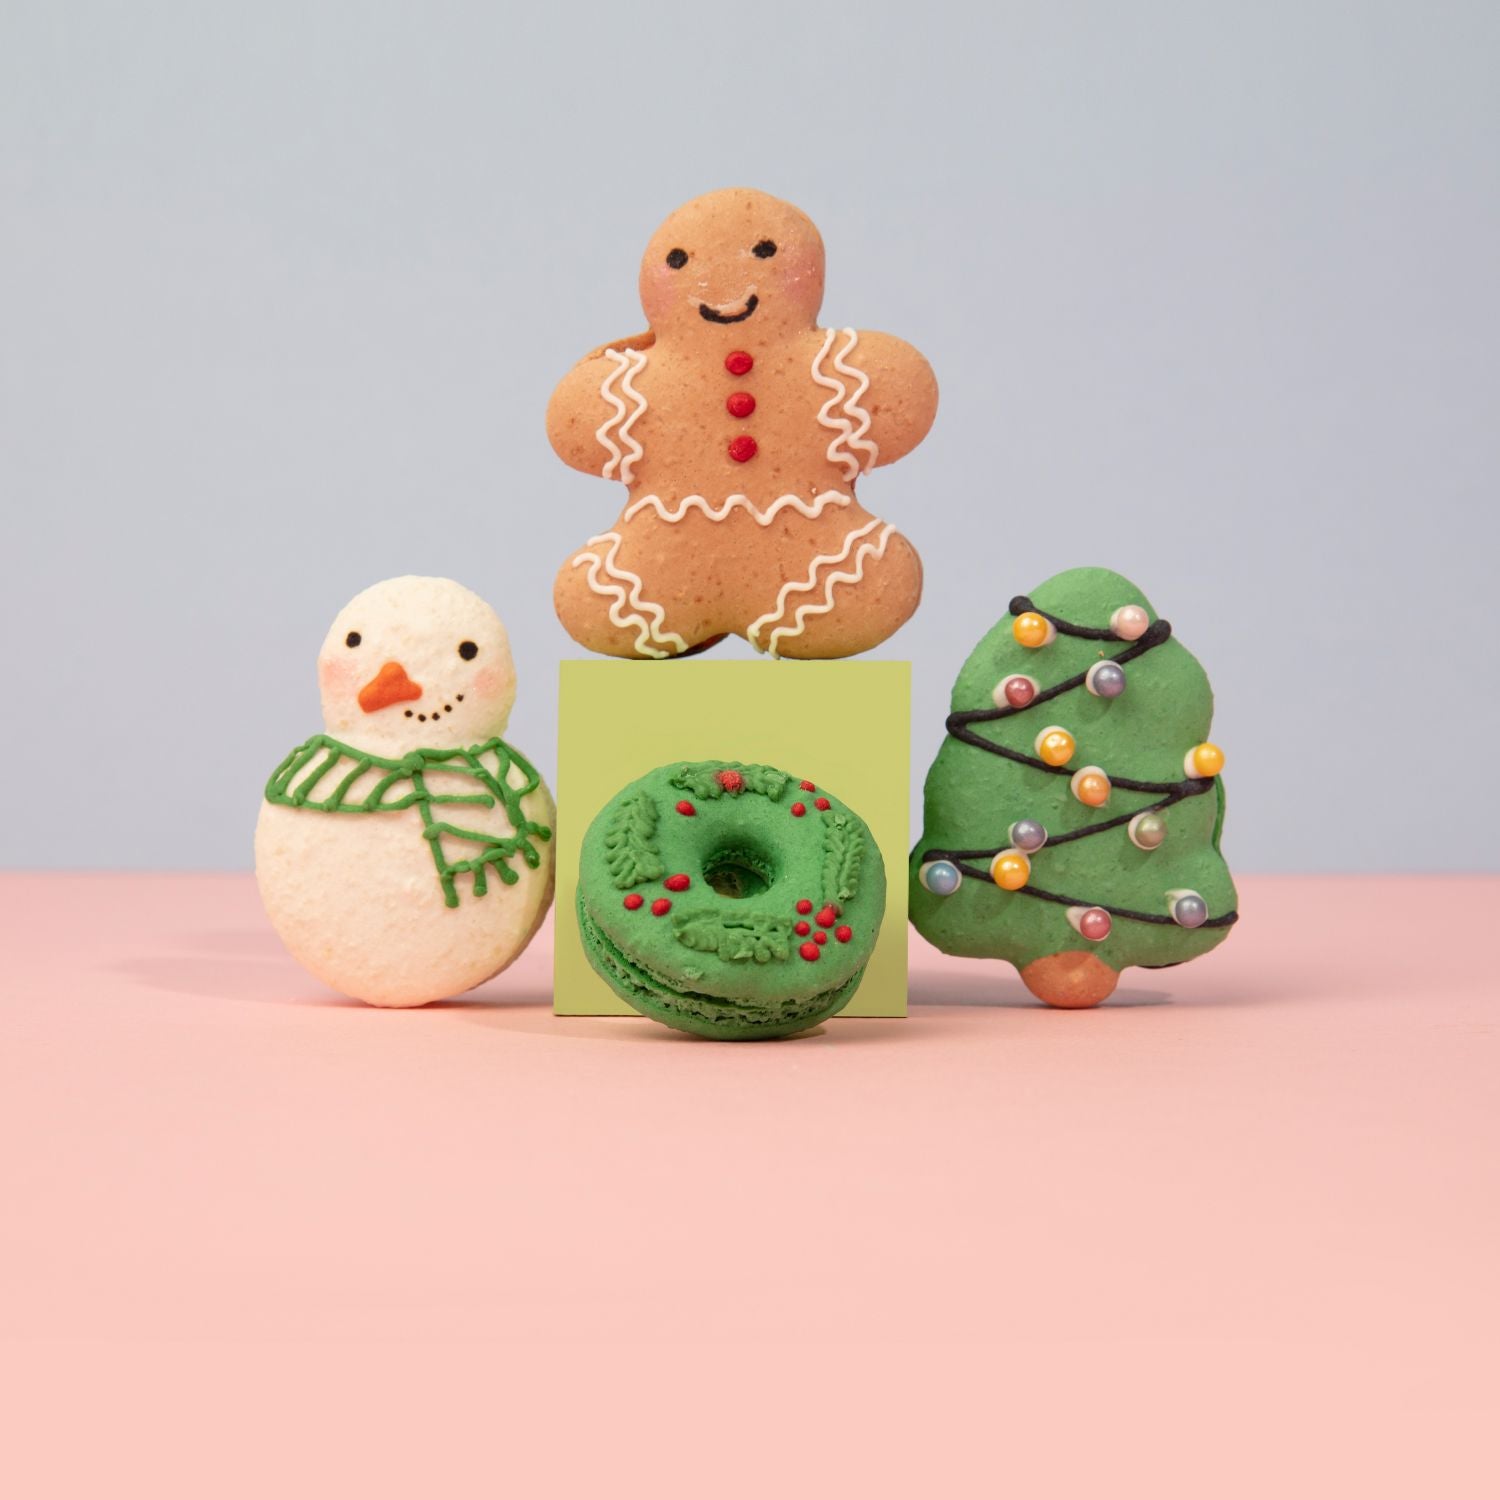 Christmas macarons including a gingerbread man, snowman, wreath, and Christmas tree at Oh La La! Macarons